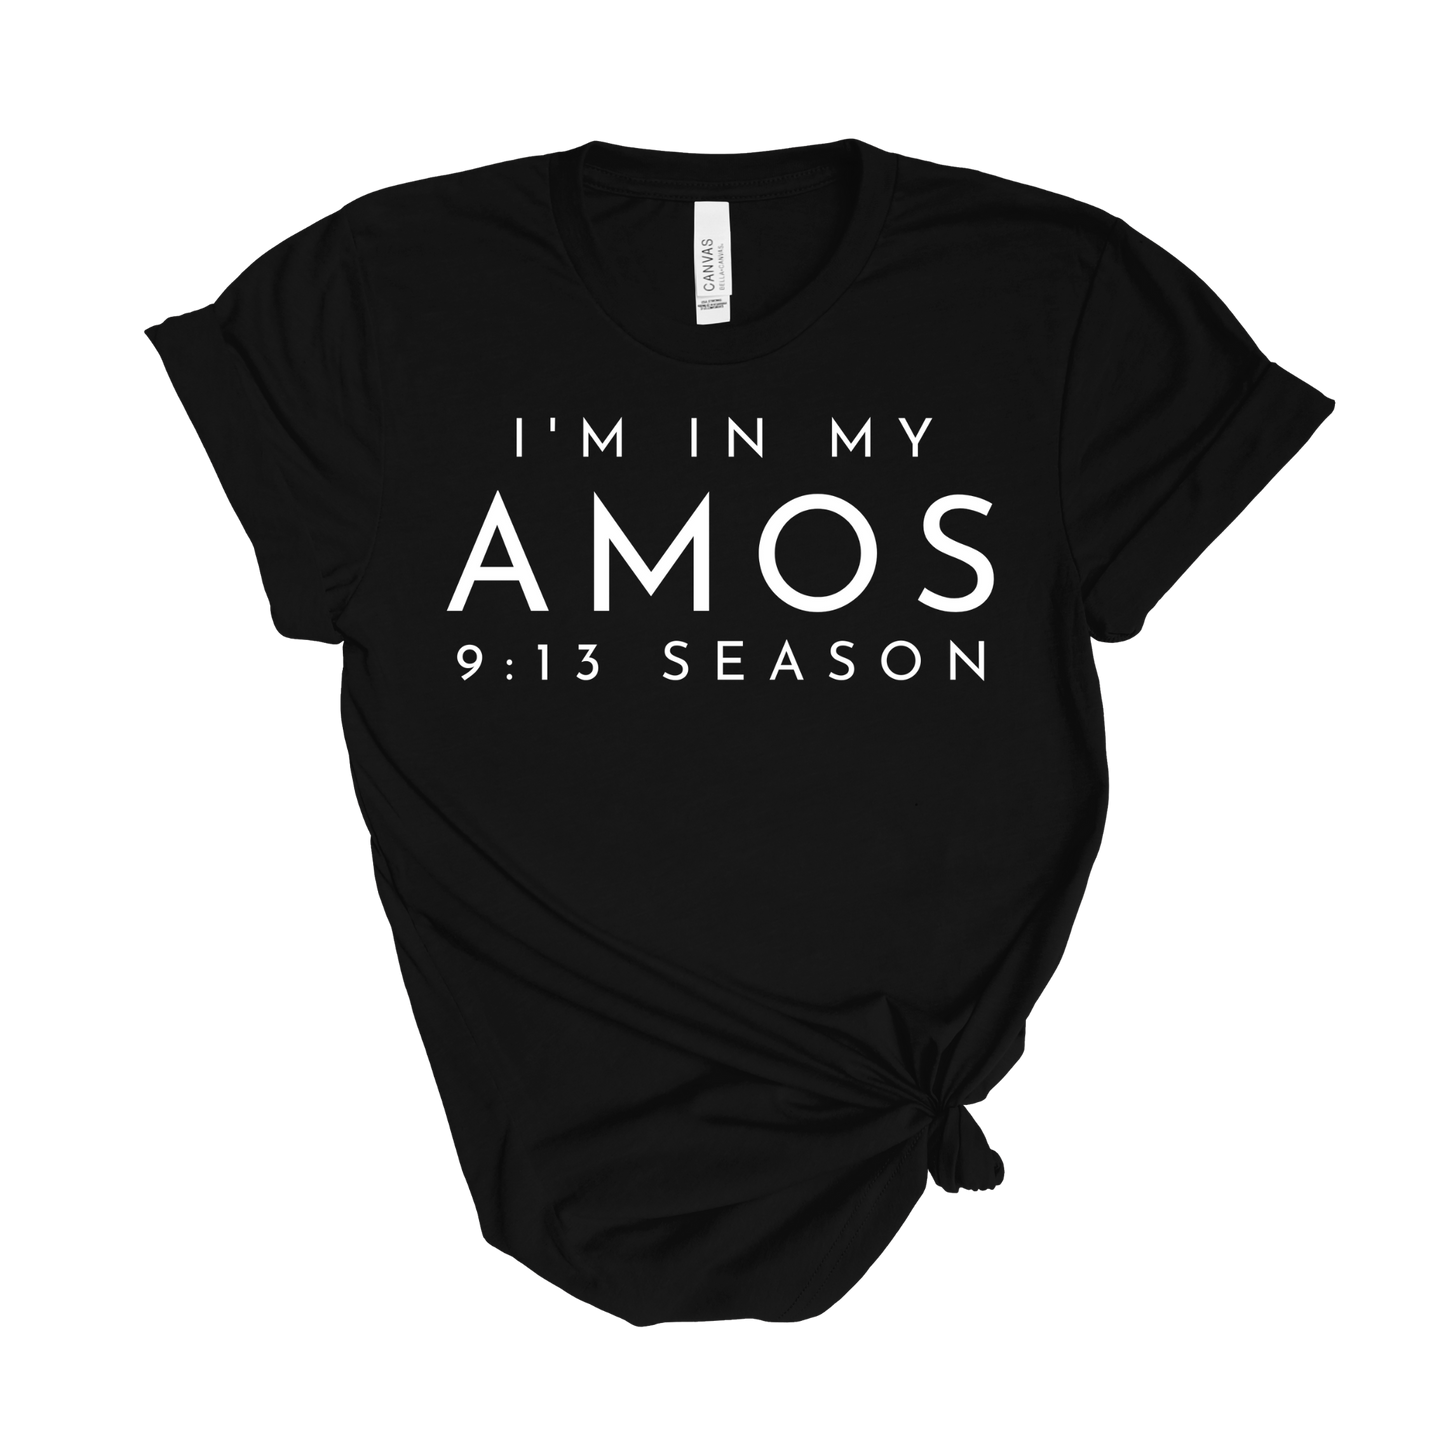 Amos Season T-Shirt